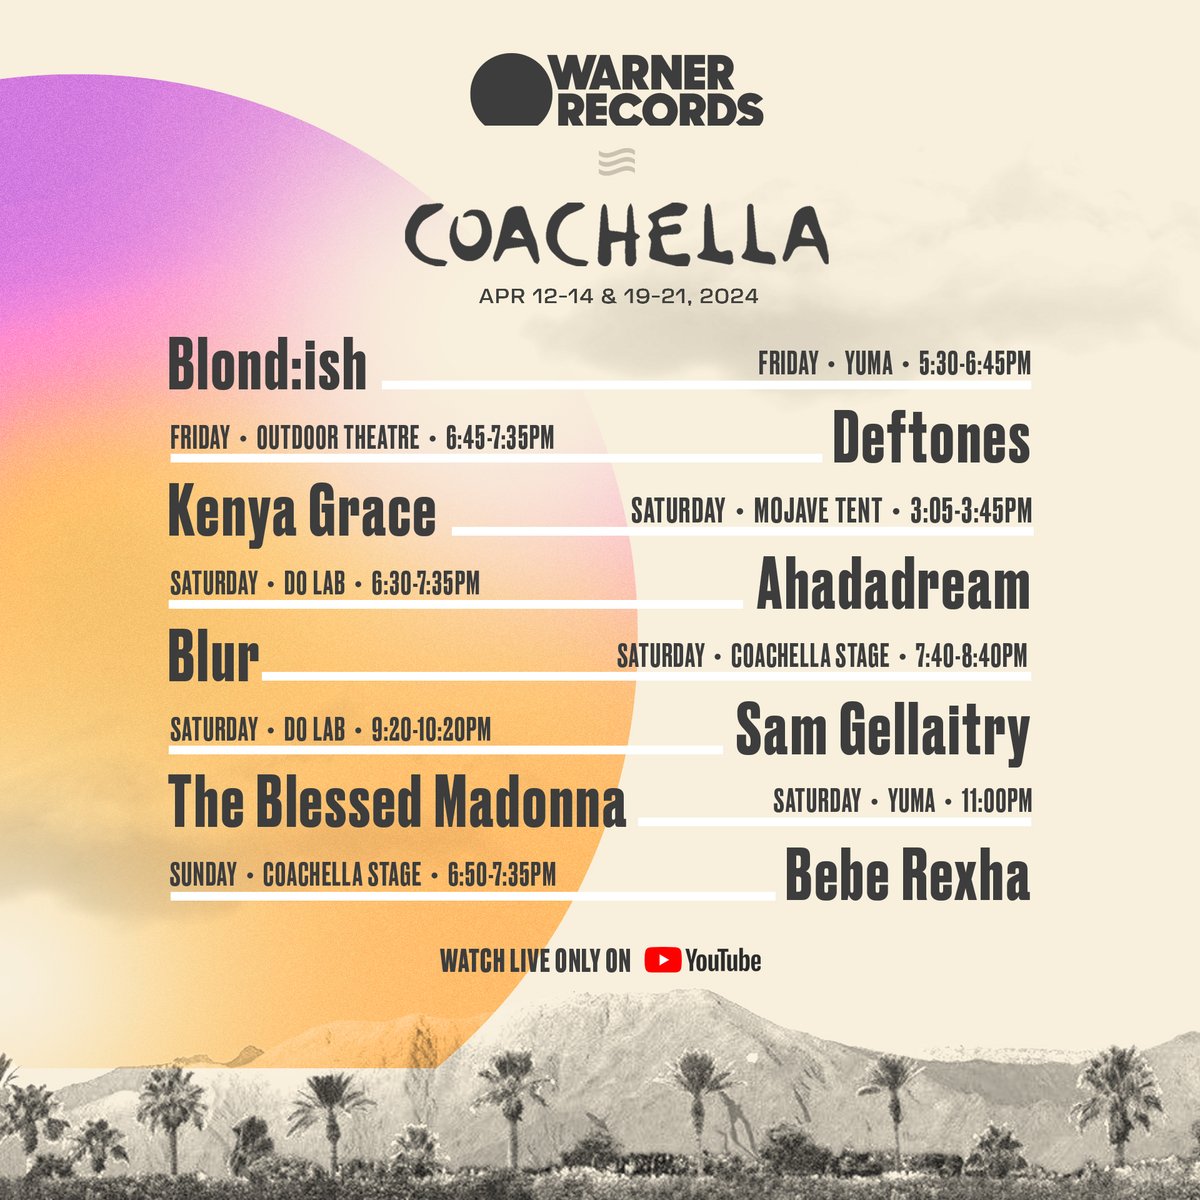 Warner Records is taking over @coachella this year! 🌵 warnerrecords.lnk.to/Coachella @ahadadream x @beberexha x @blondish x @blurofficial x @deftones x @kenyagrace x @samgellaitry x @Blessed_Madonna @majorrecs